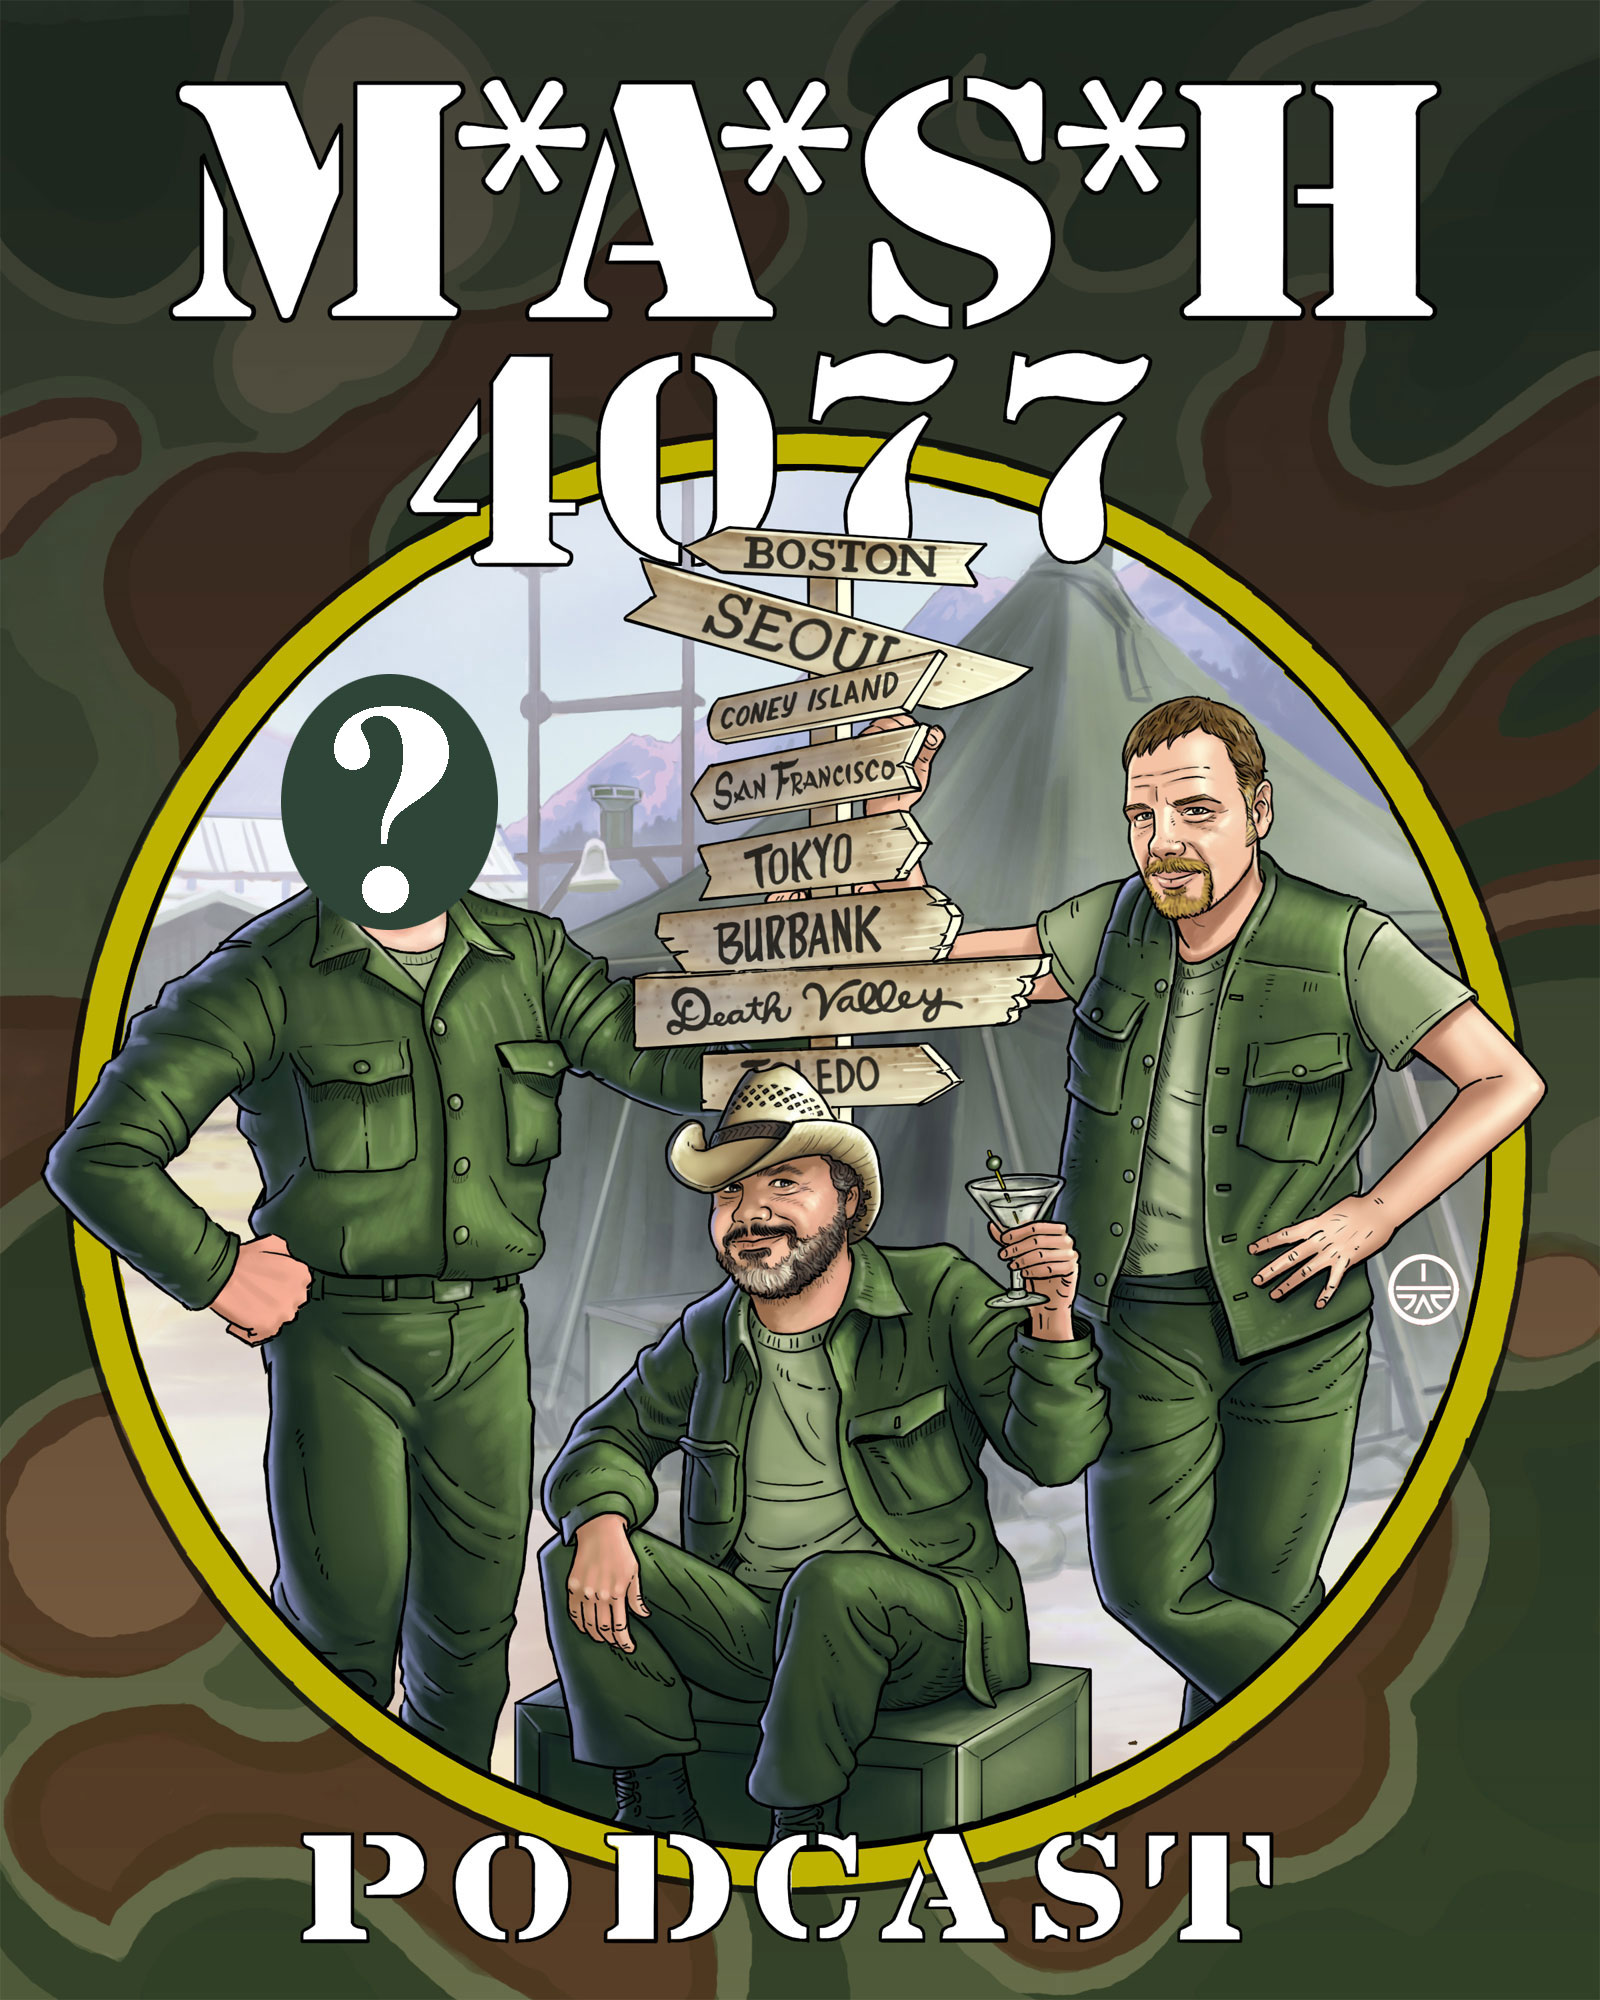 MASH 4077 Podcast Episode 155 (Actually 156)